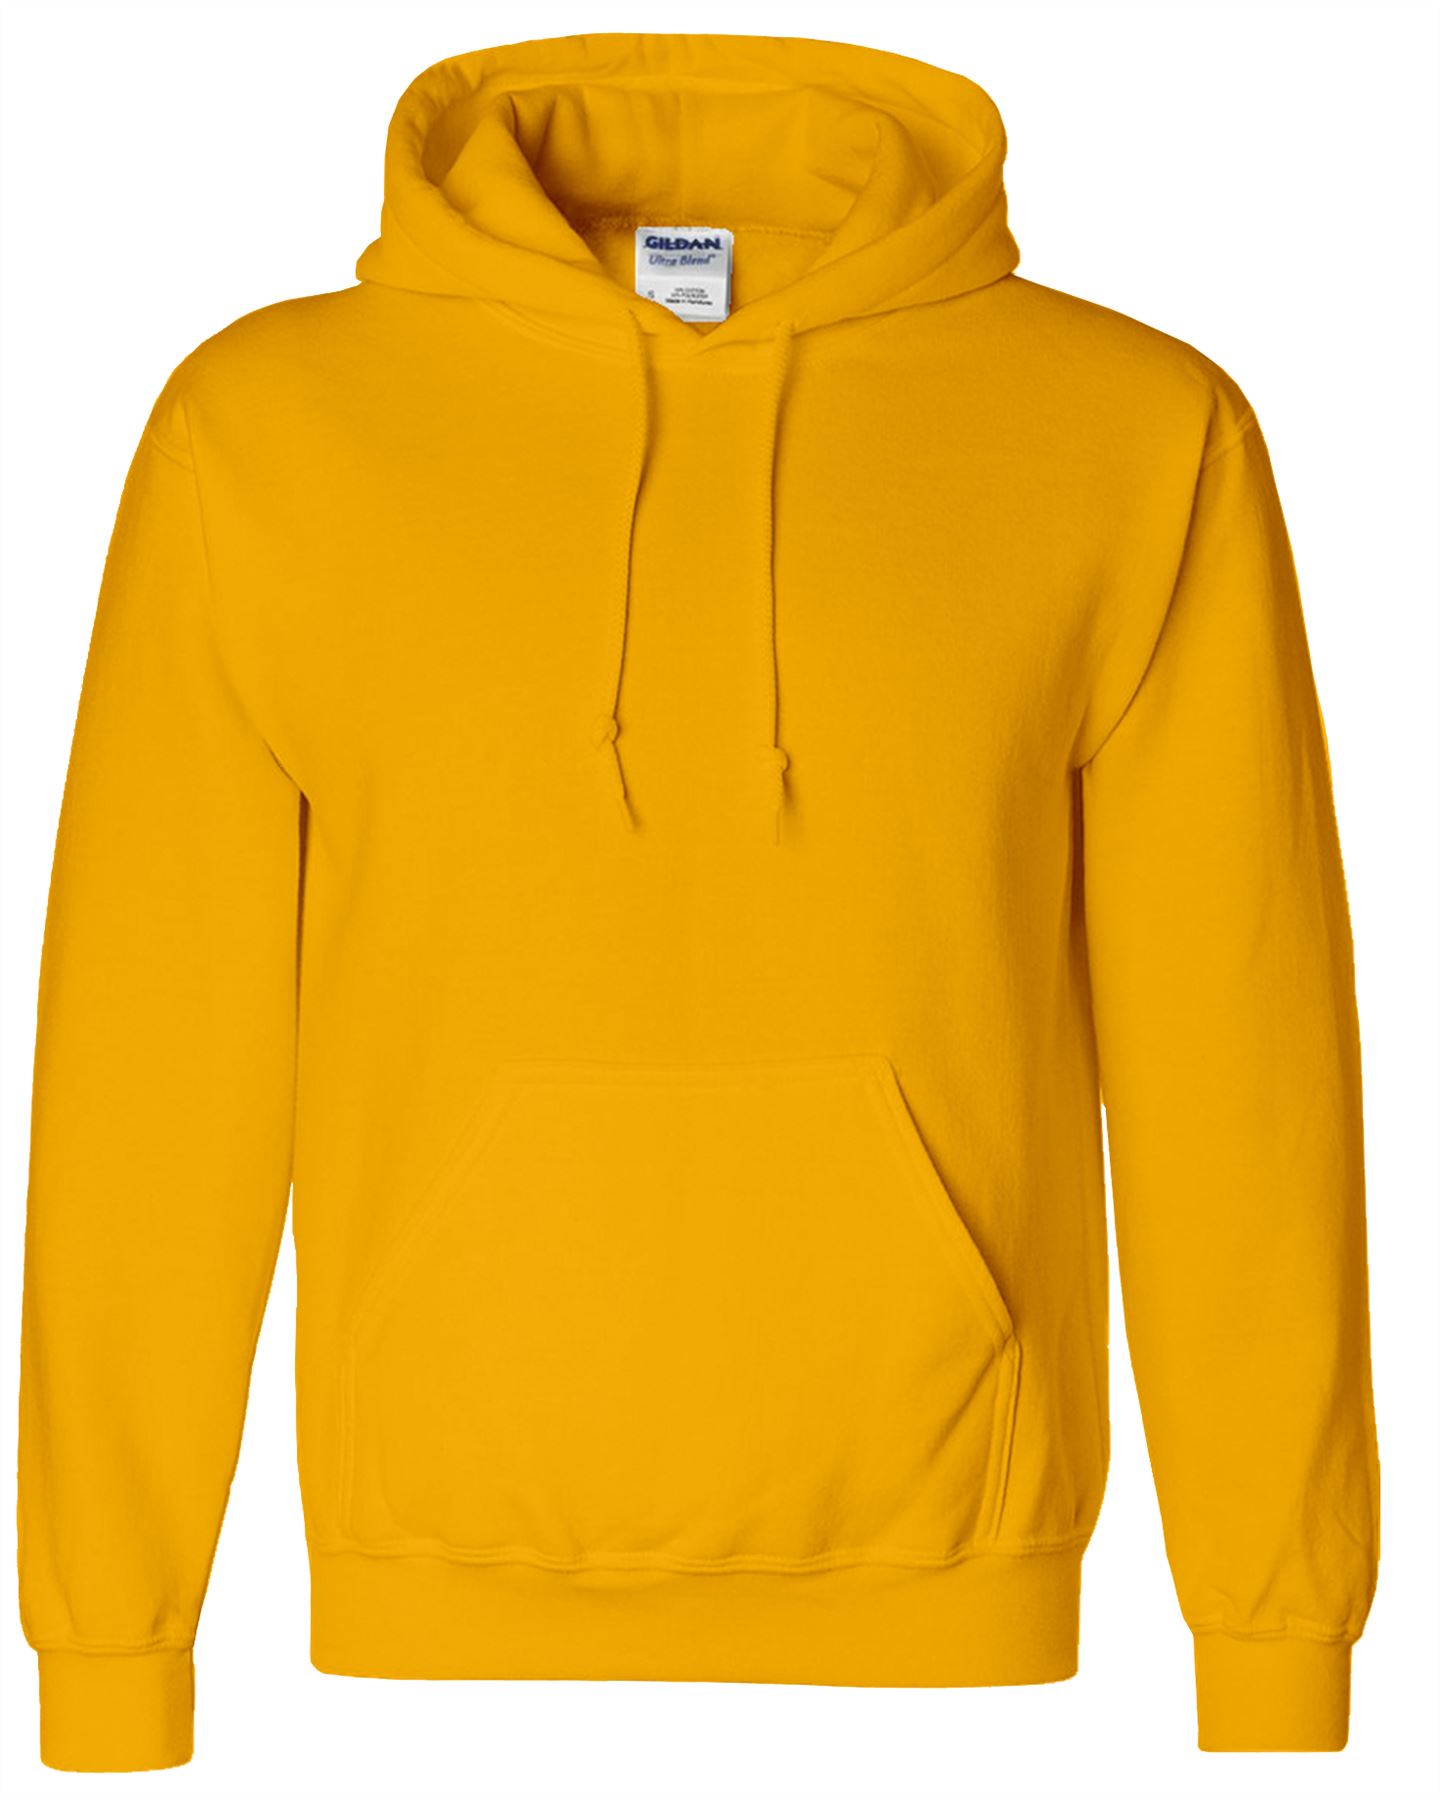 plain hoodies for sale